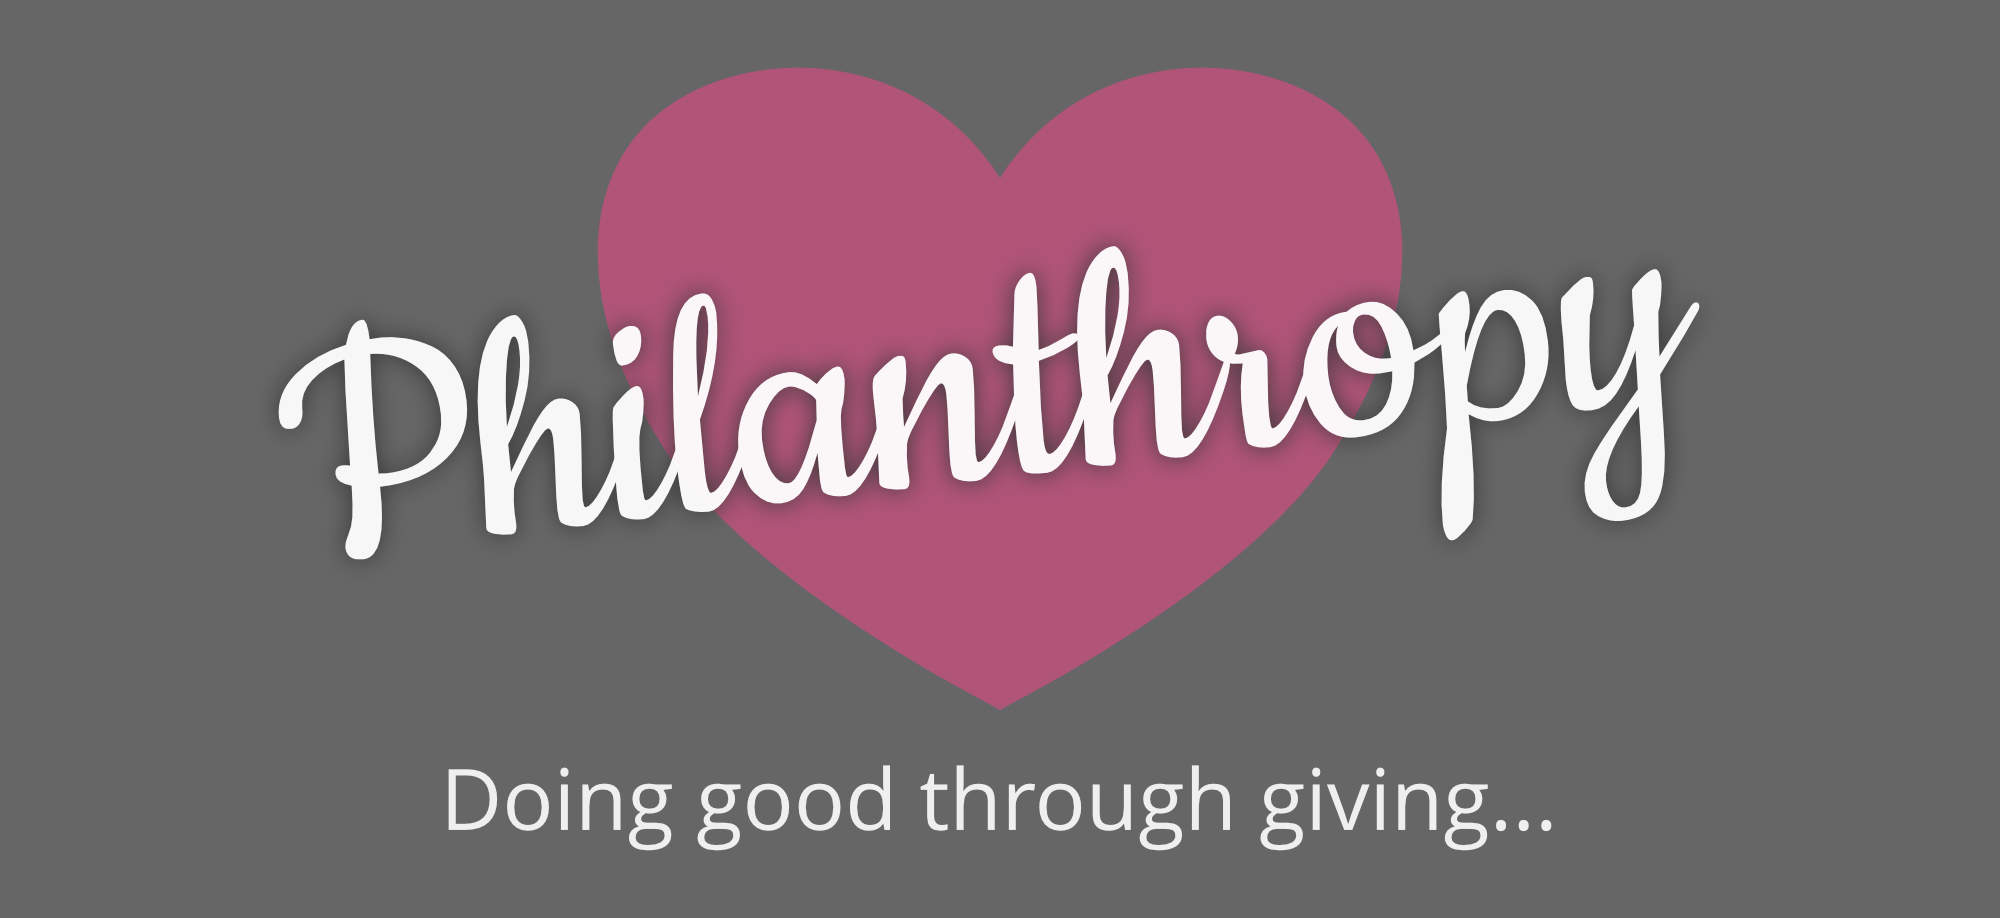 Philanthropy: Past and Present